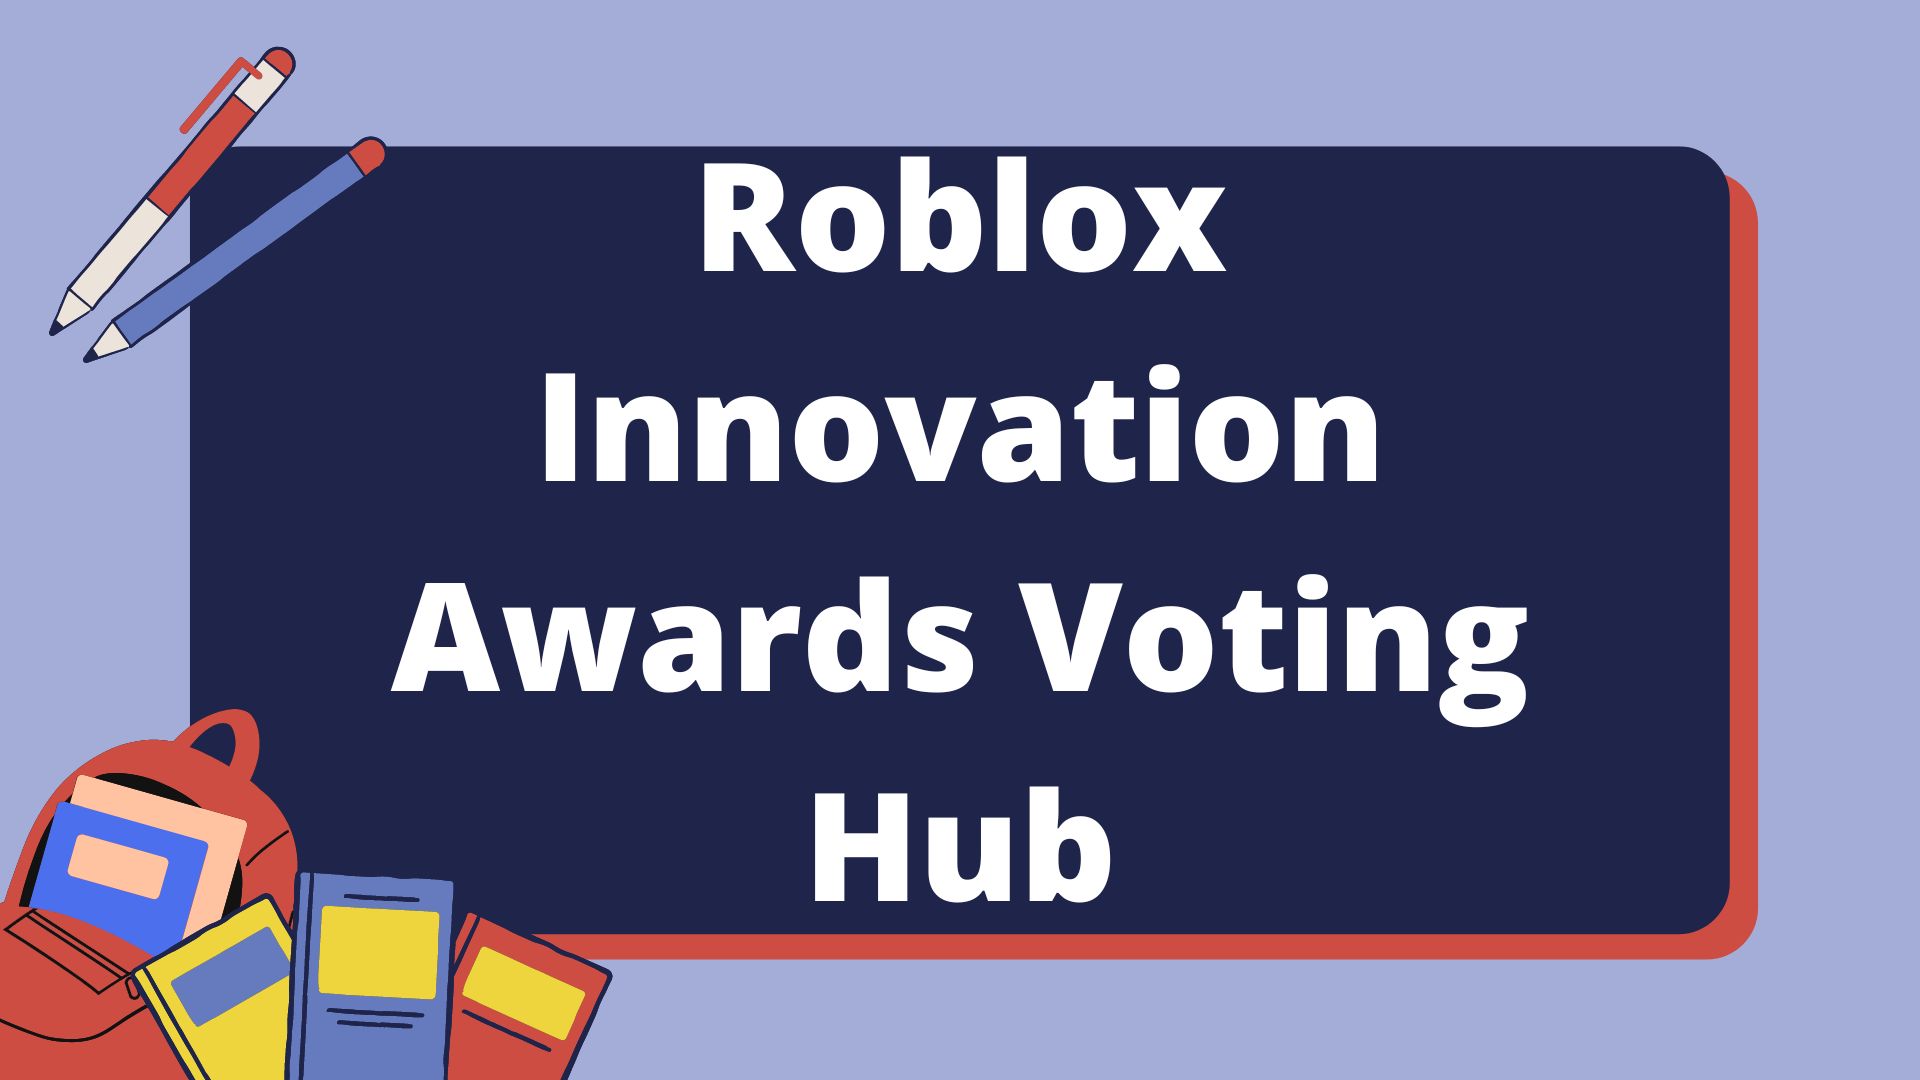 Roblox Innovation Awards Voting Hub